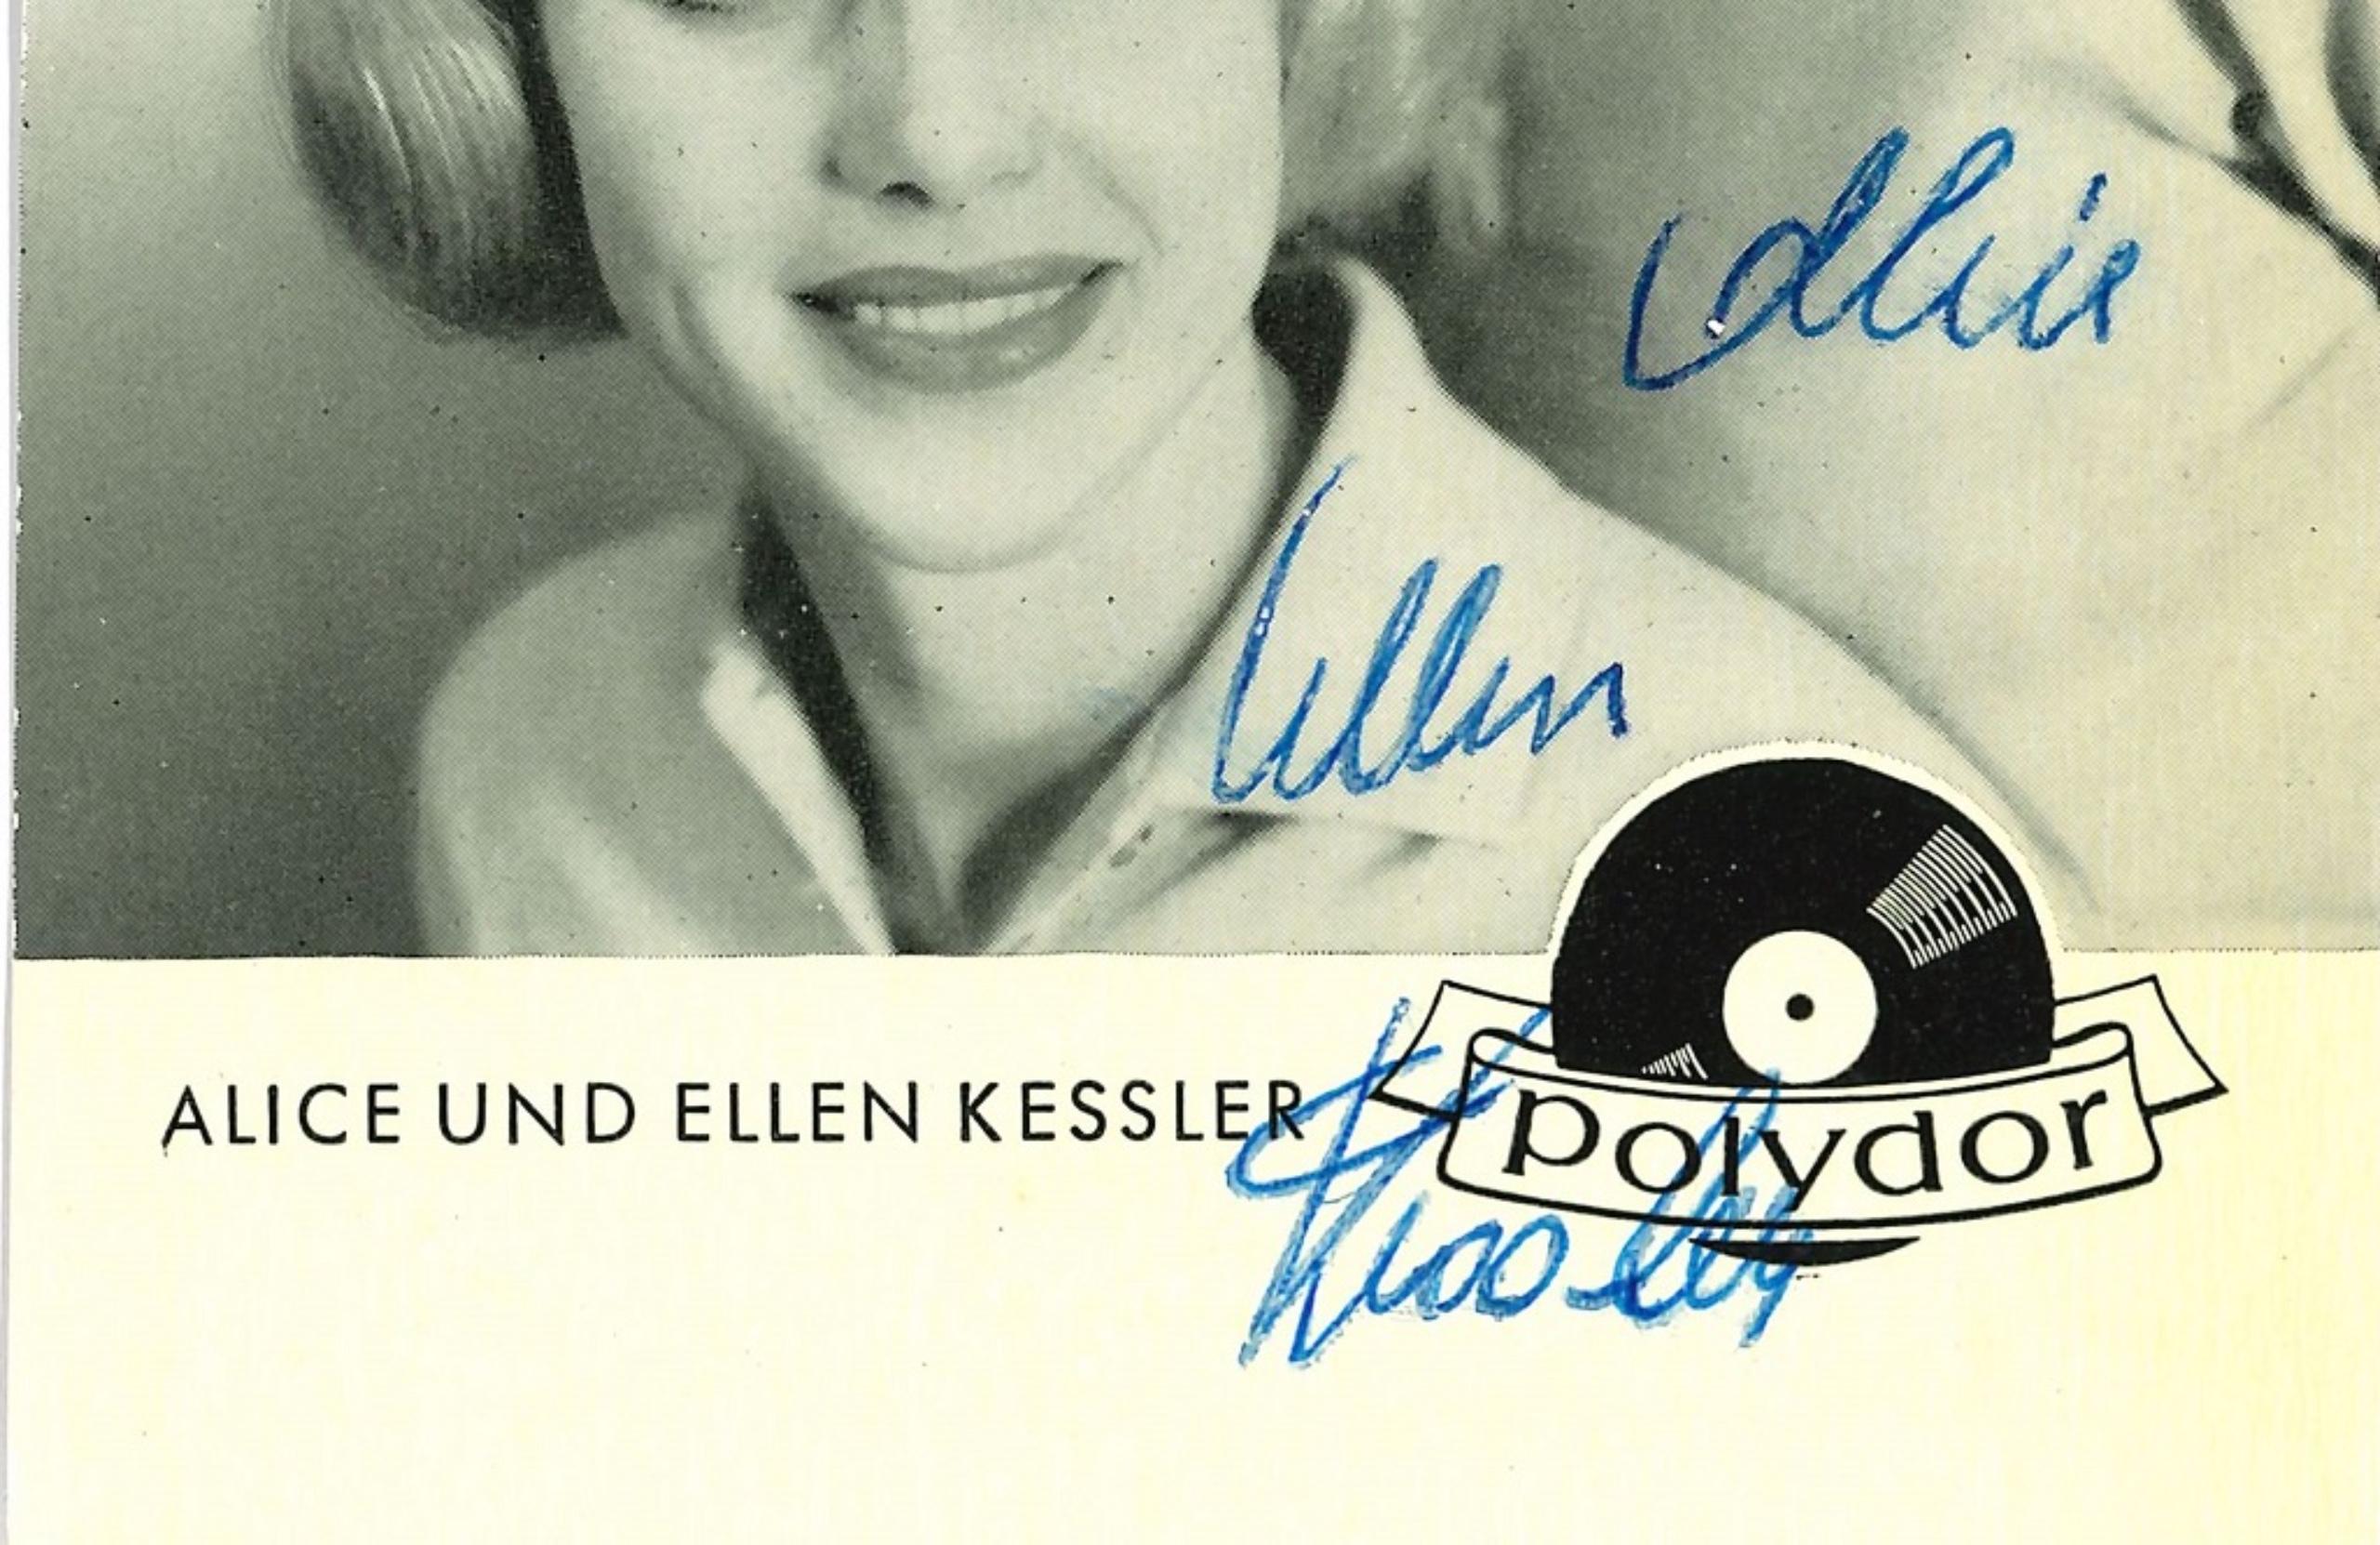 Autographed Portrait of The Kessler Twins - Vintage b/w Postcard - 1960s - Photograph by Unknown